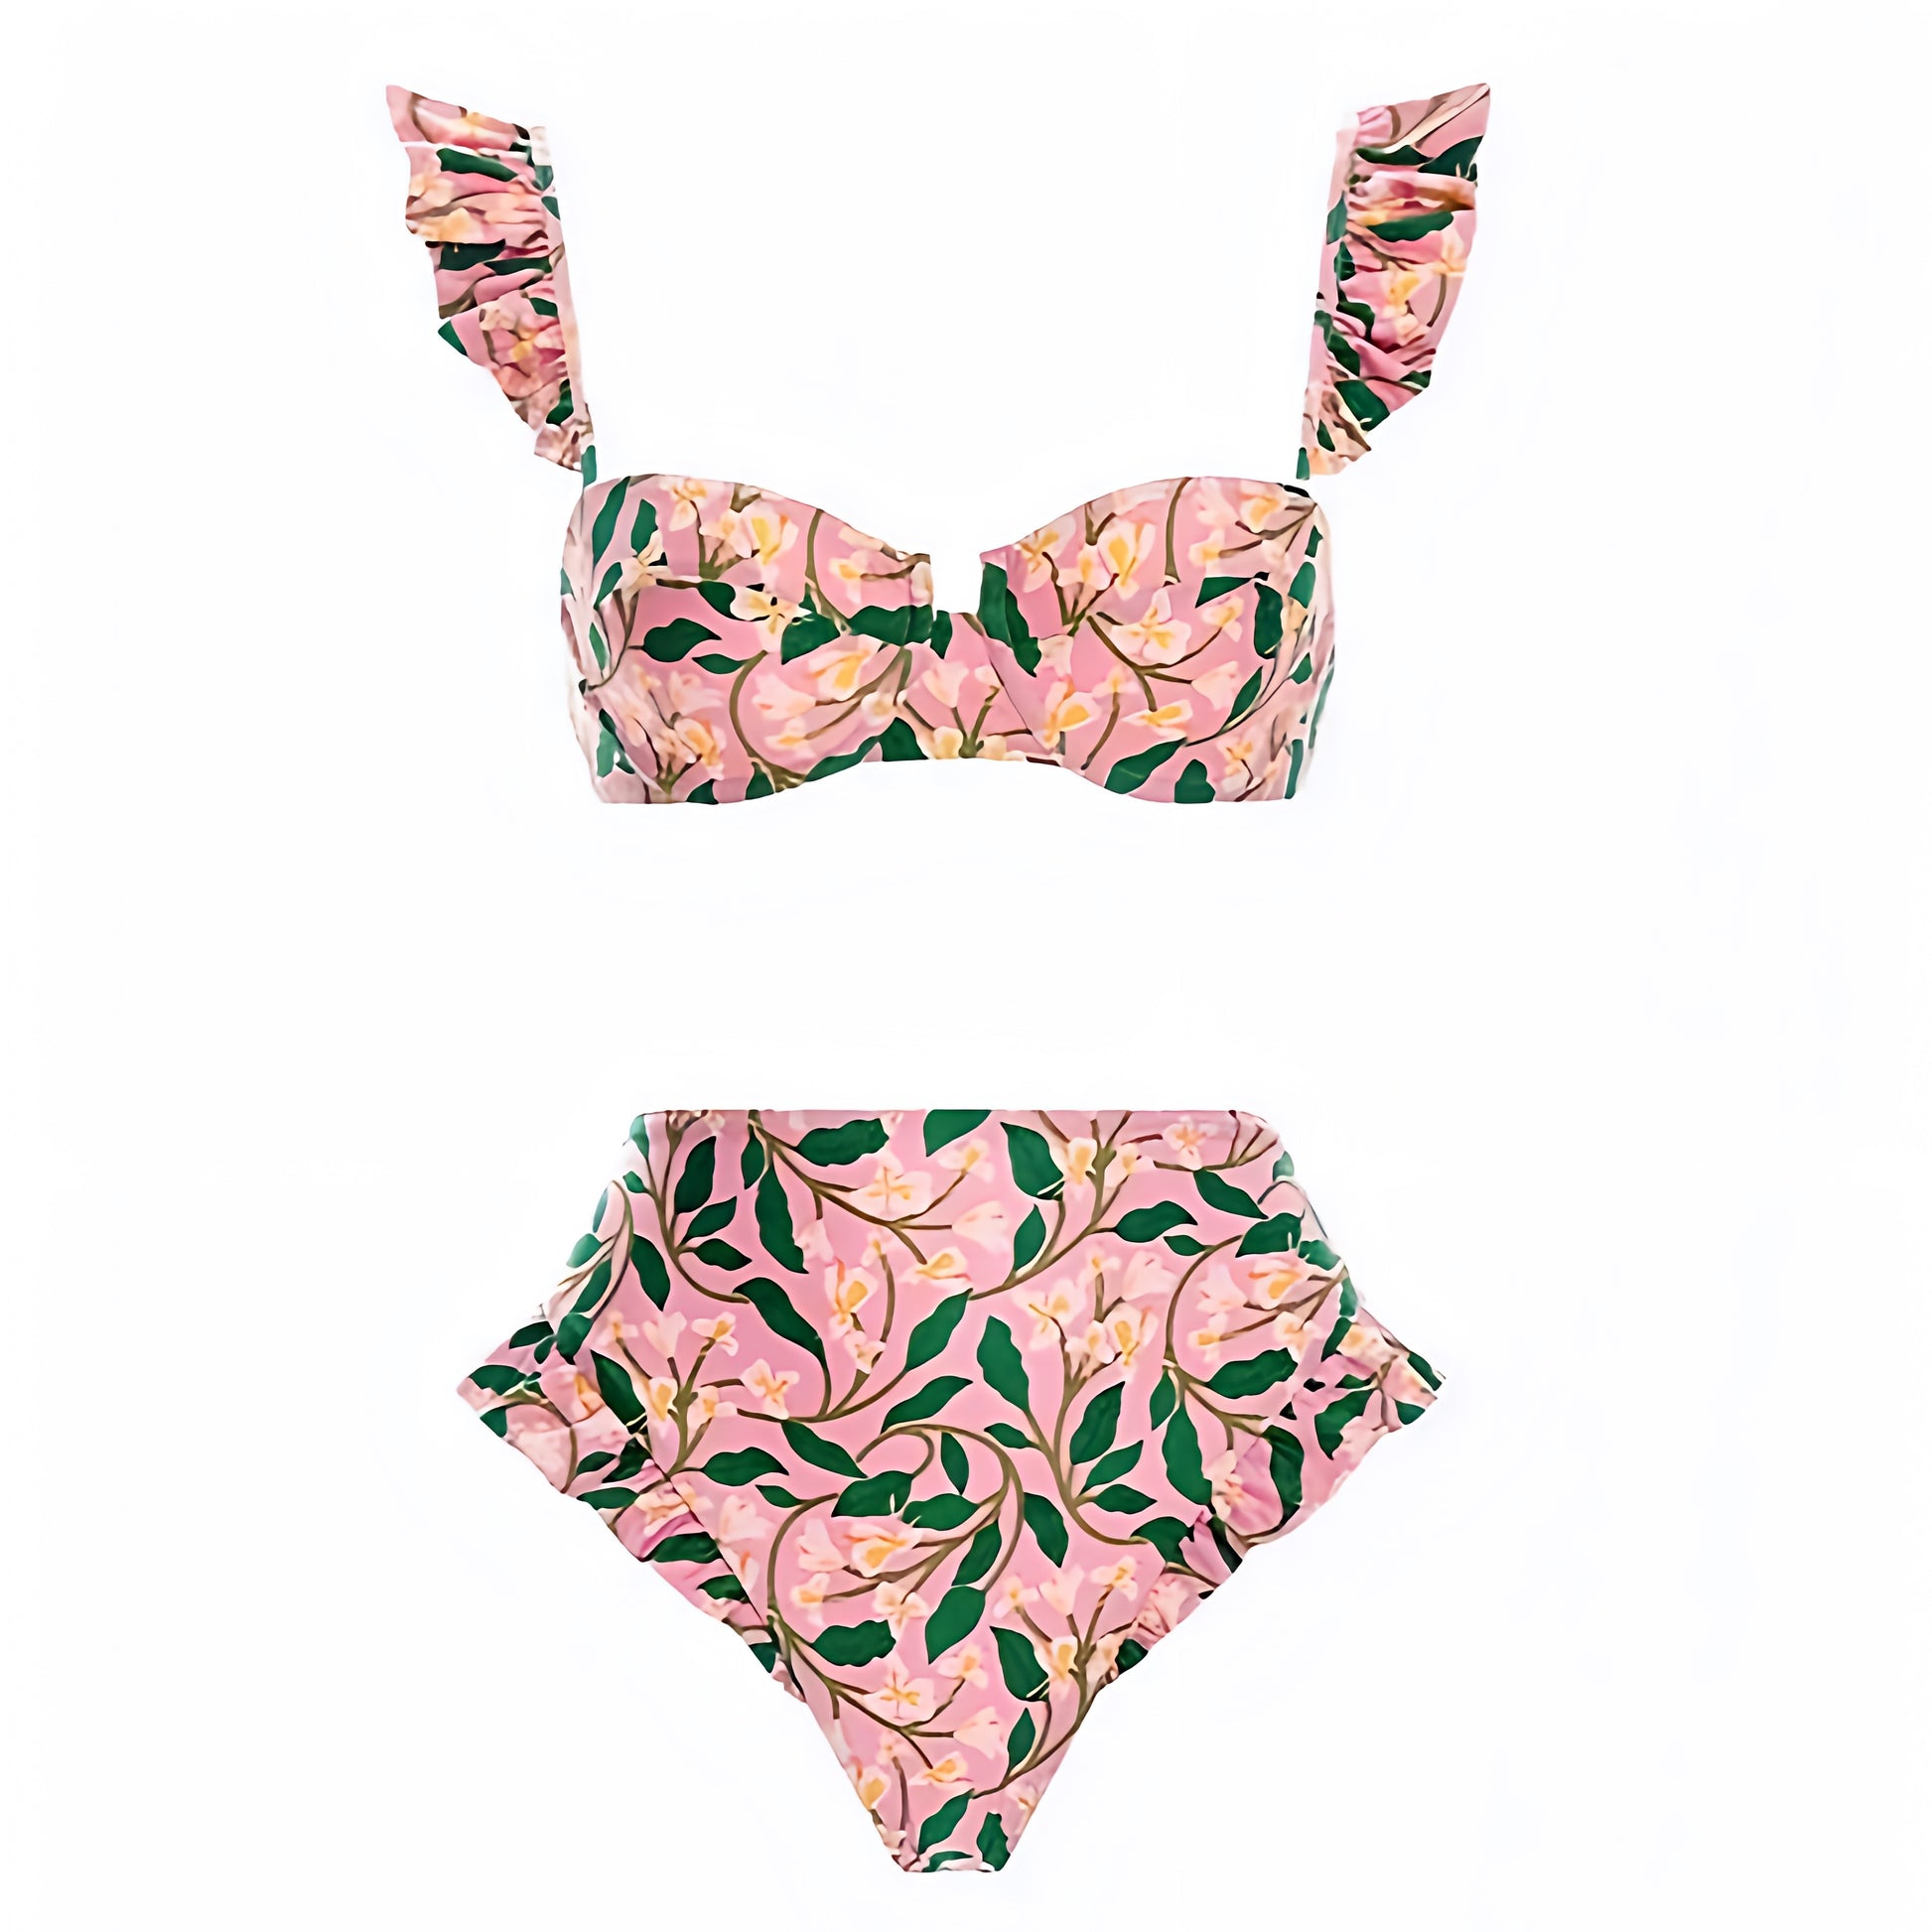 floral-print-pink-yellow-green-multi-color-flower-patterned-ruffle-trim-sweetheart-neckline-spaghetti-strap-sleeveless-backless-open-back-underwire-push-up-cheeky-thong-boho-bohemian-2-piece-bikini-set-top-bottoms-swimsuit-swimwear-bathing-suit-women-ladies-teens-tweens-chic-trendy-spring-2024-summer-elegant-feminine-preppy-style-tropical-hawaiian-vacation-beach-wear-revolve-altard-state-loveshackfancy-frankies-bikinis-blackbough-kulakinis-fillyboo-dupe